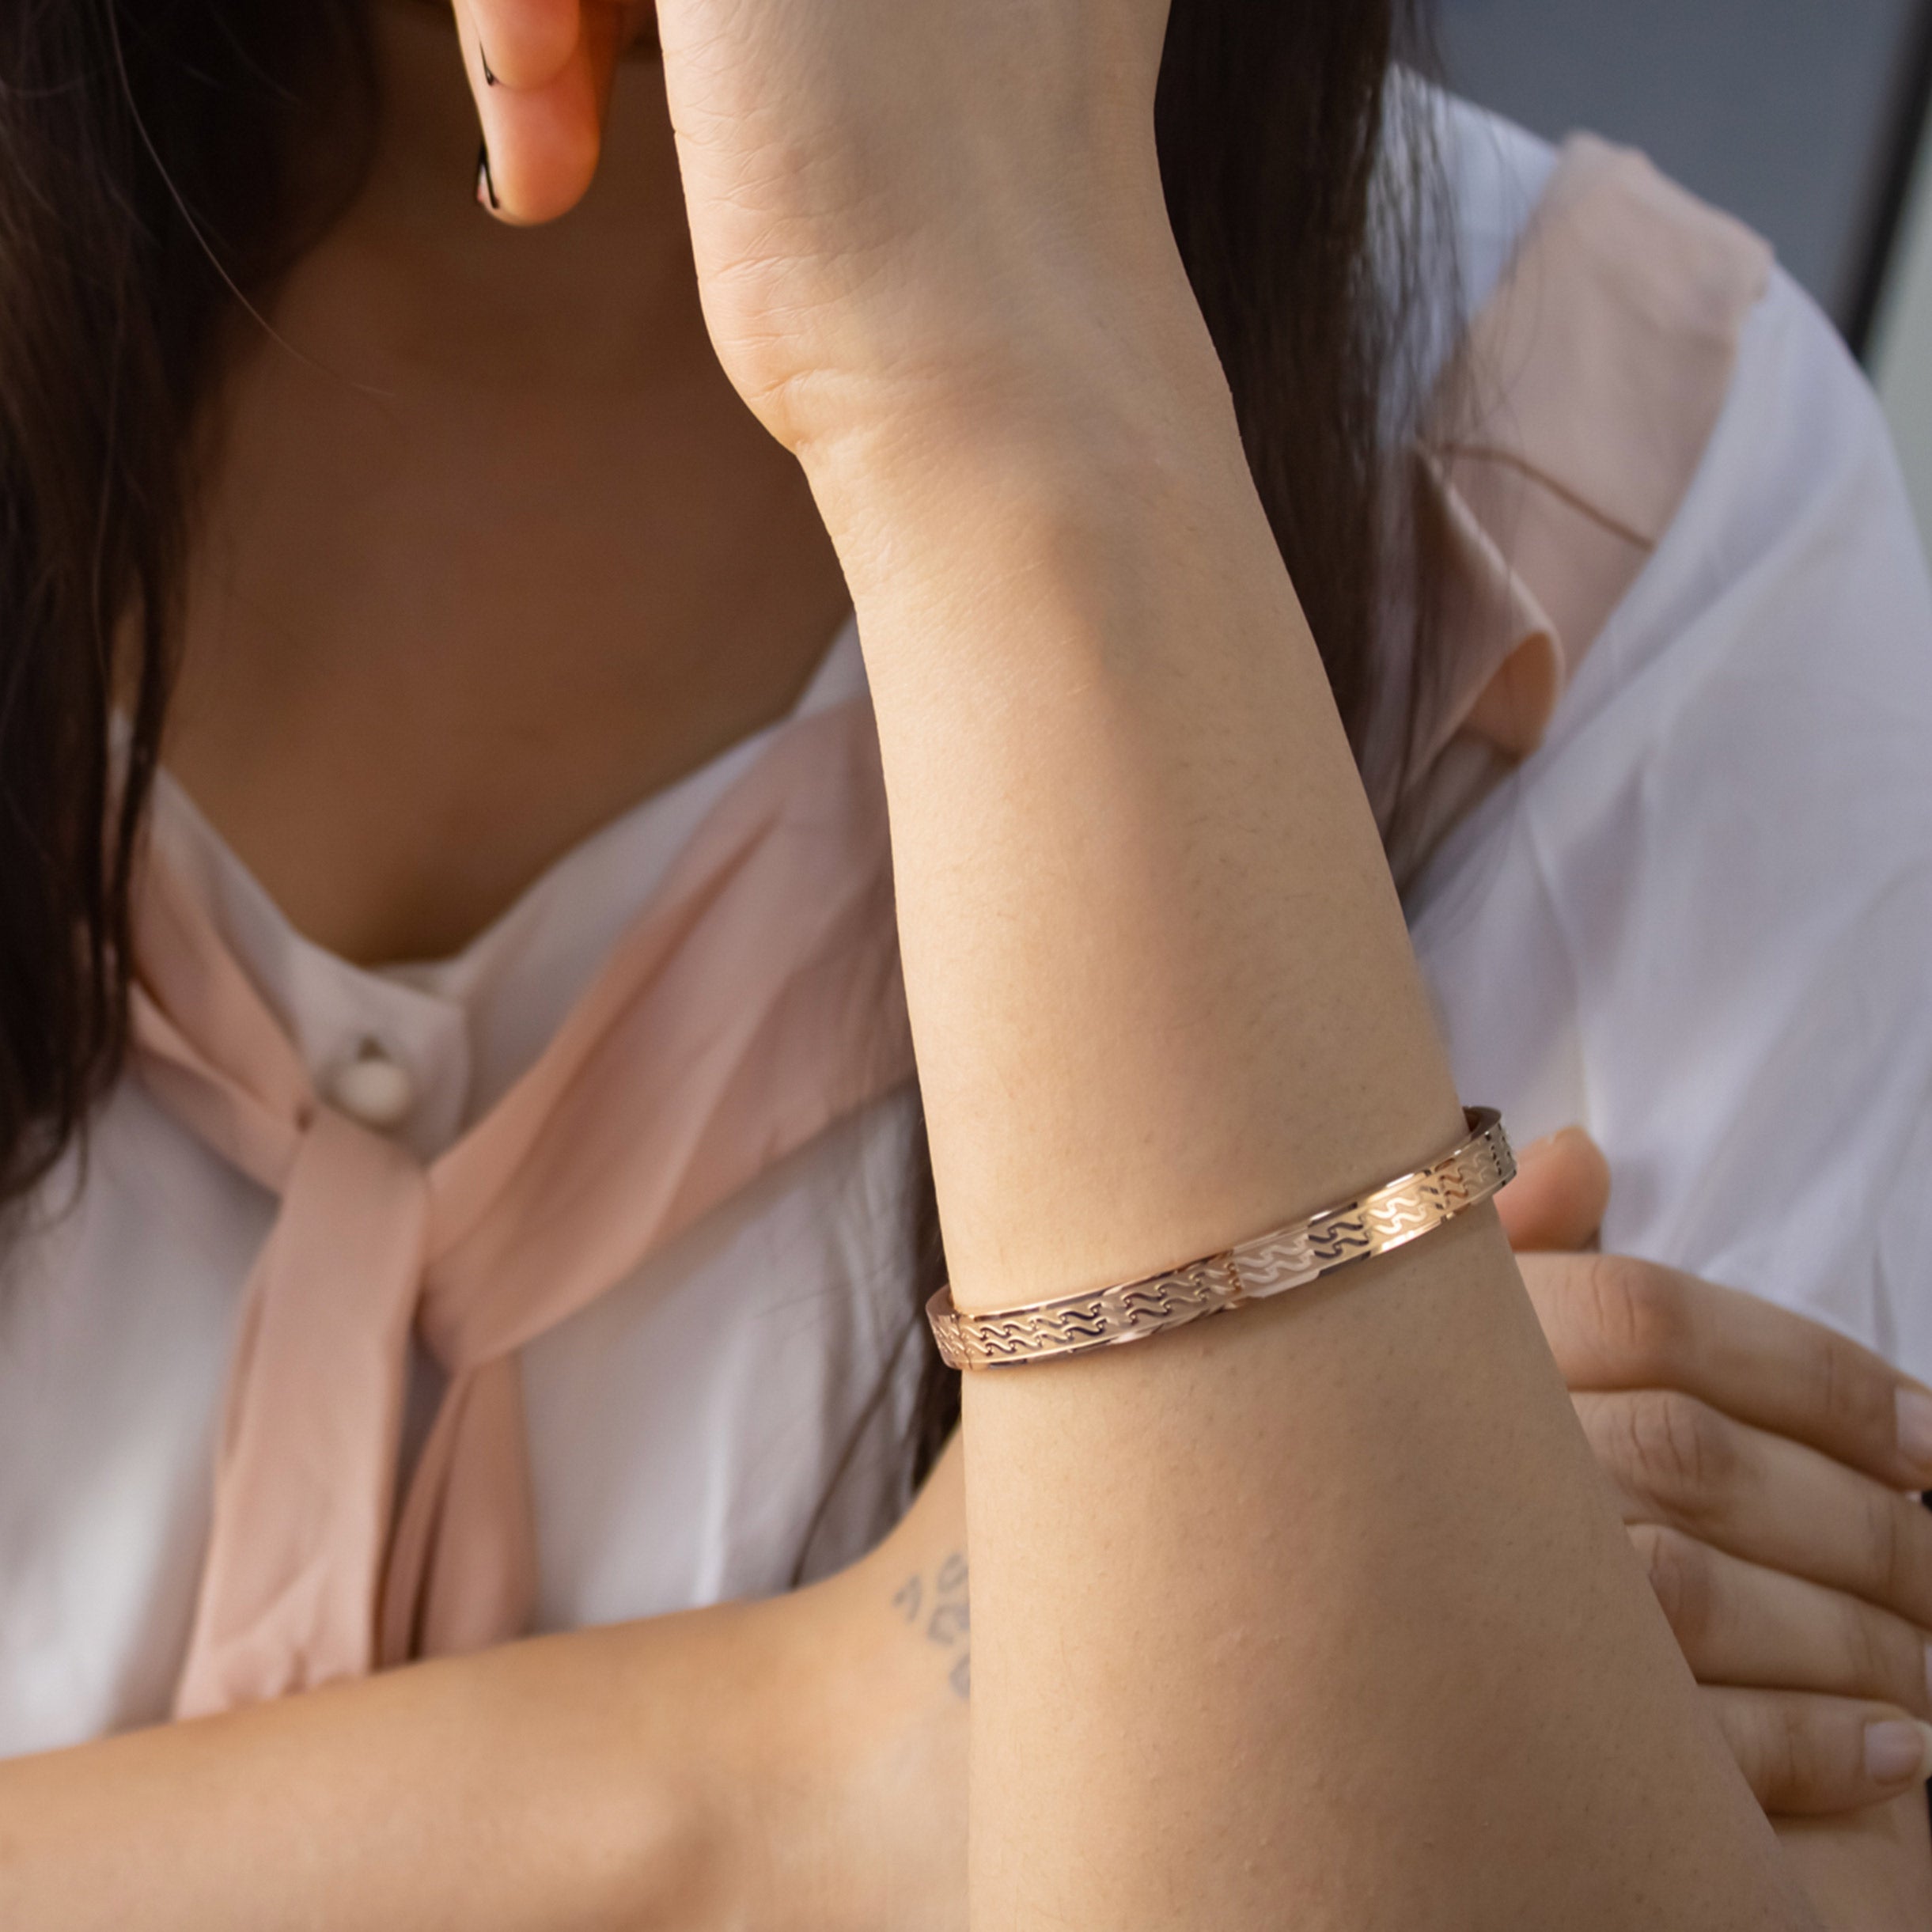 Women's Bracelets: Explore Bangle Bracelets For Women & More - Watch Station